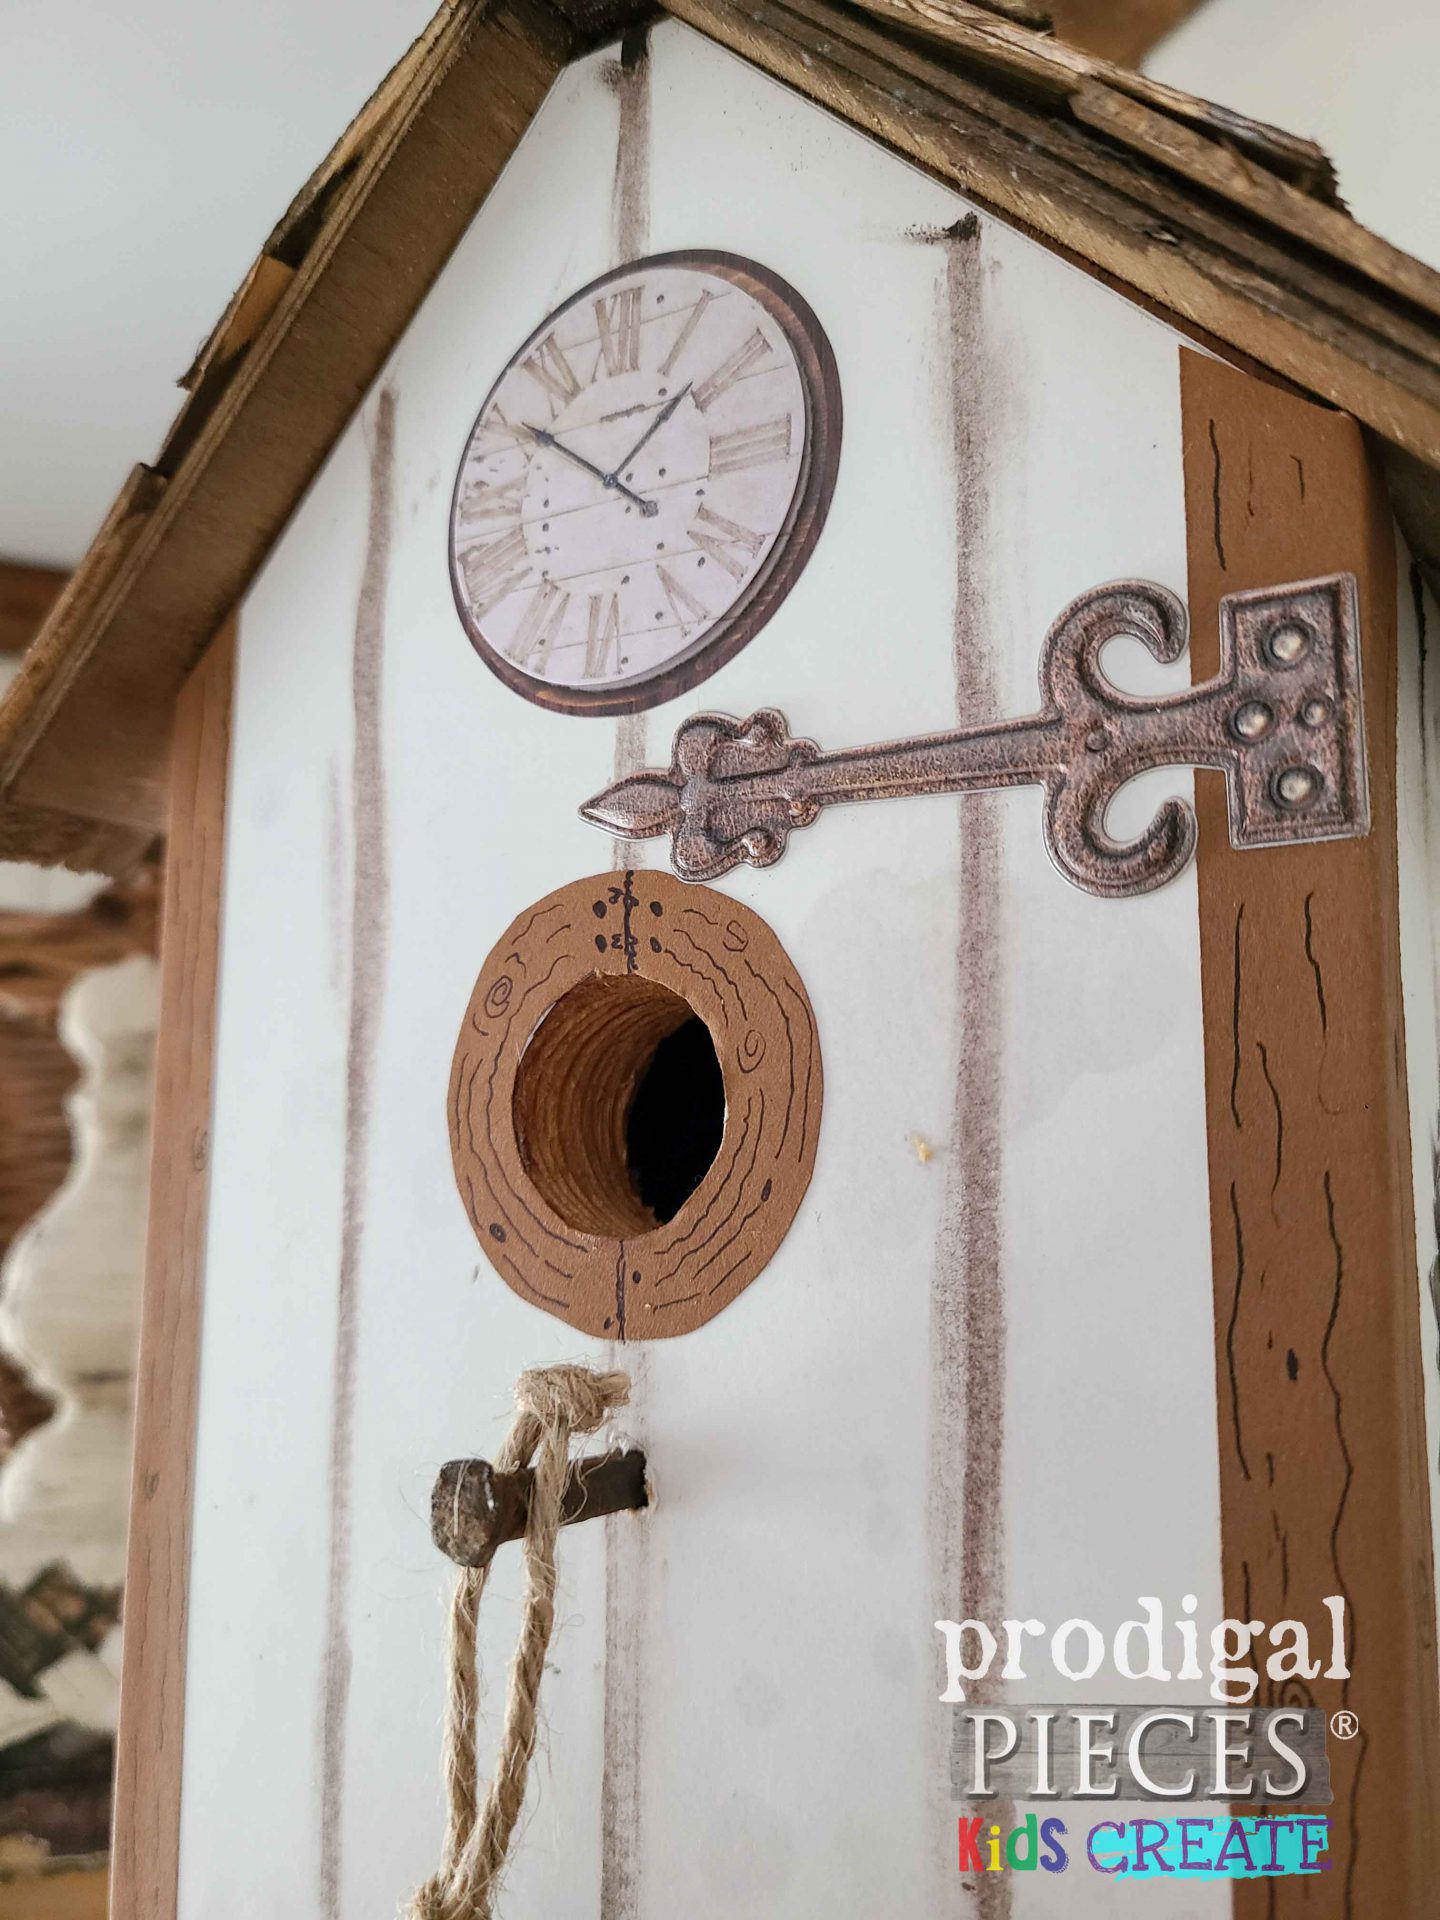 Wood Grain Closeup on DIY Birdhouse by Prodigal Pieces KIDS Create | prodigalpieces.com #prodigalpieces #farmhouse #home #diy